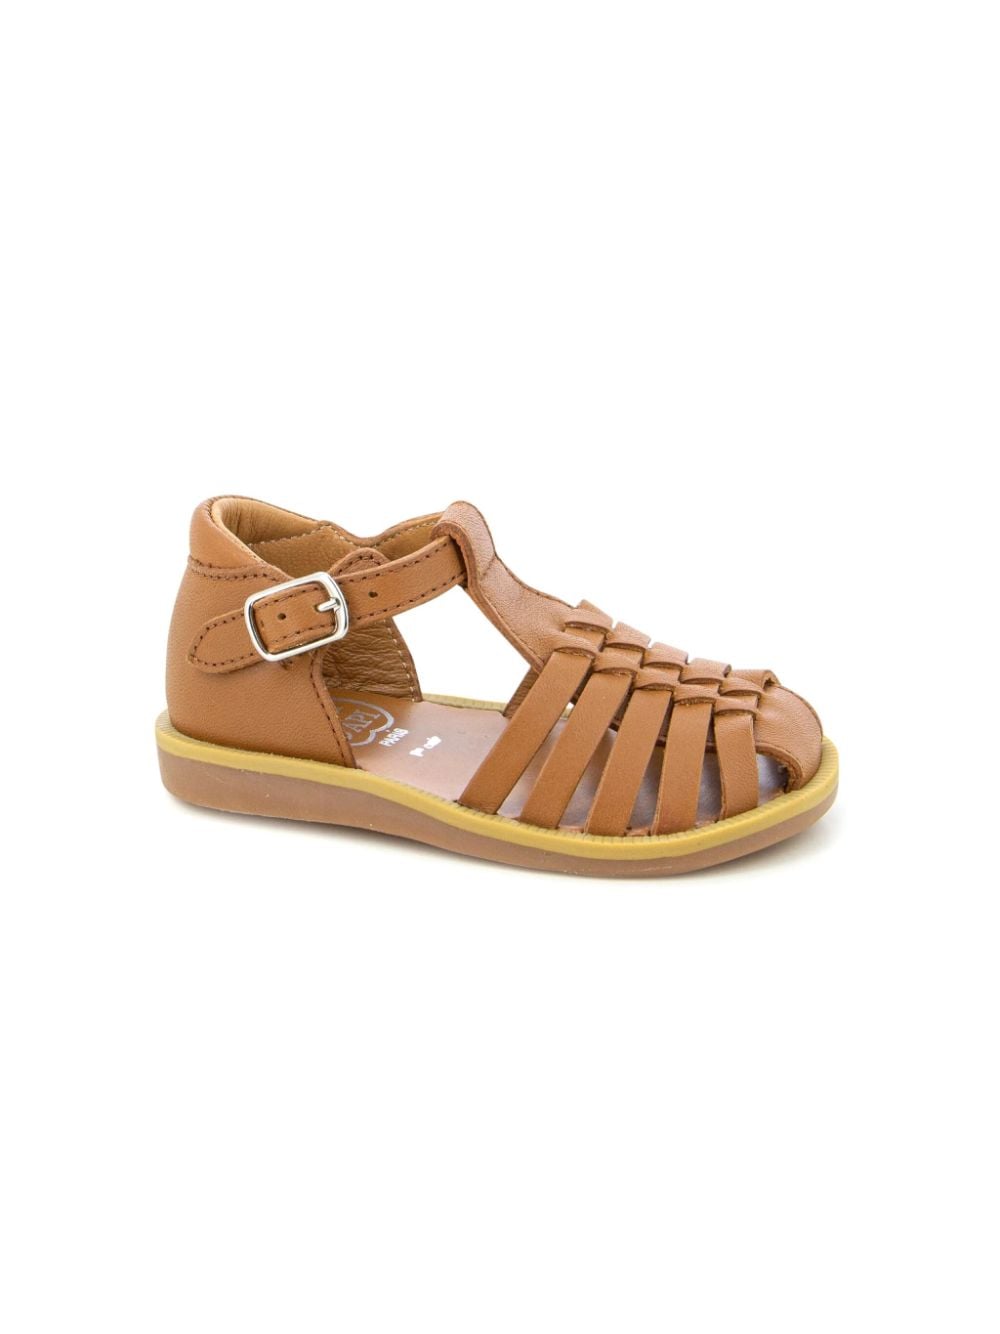 Pom D'api caged leather sandals - Brown von Pom D'api